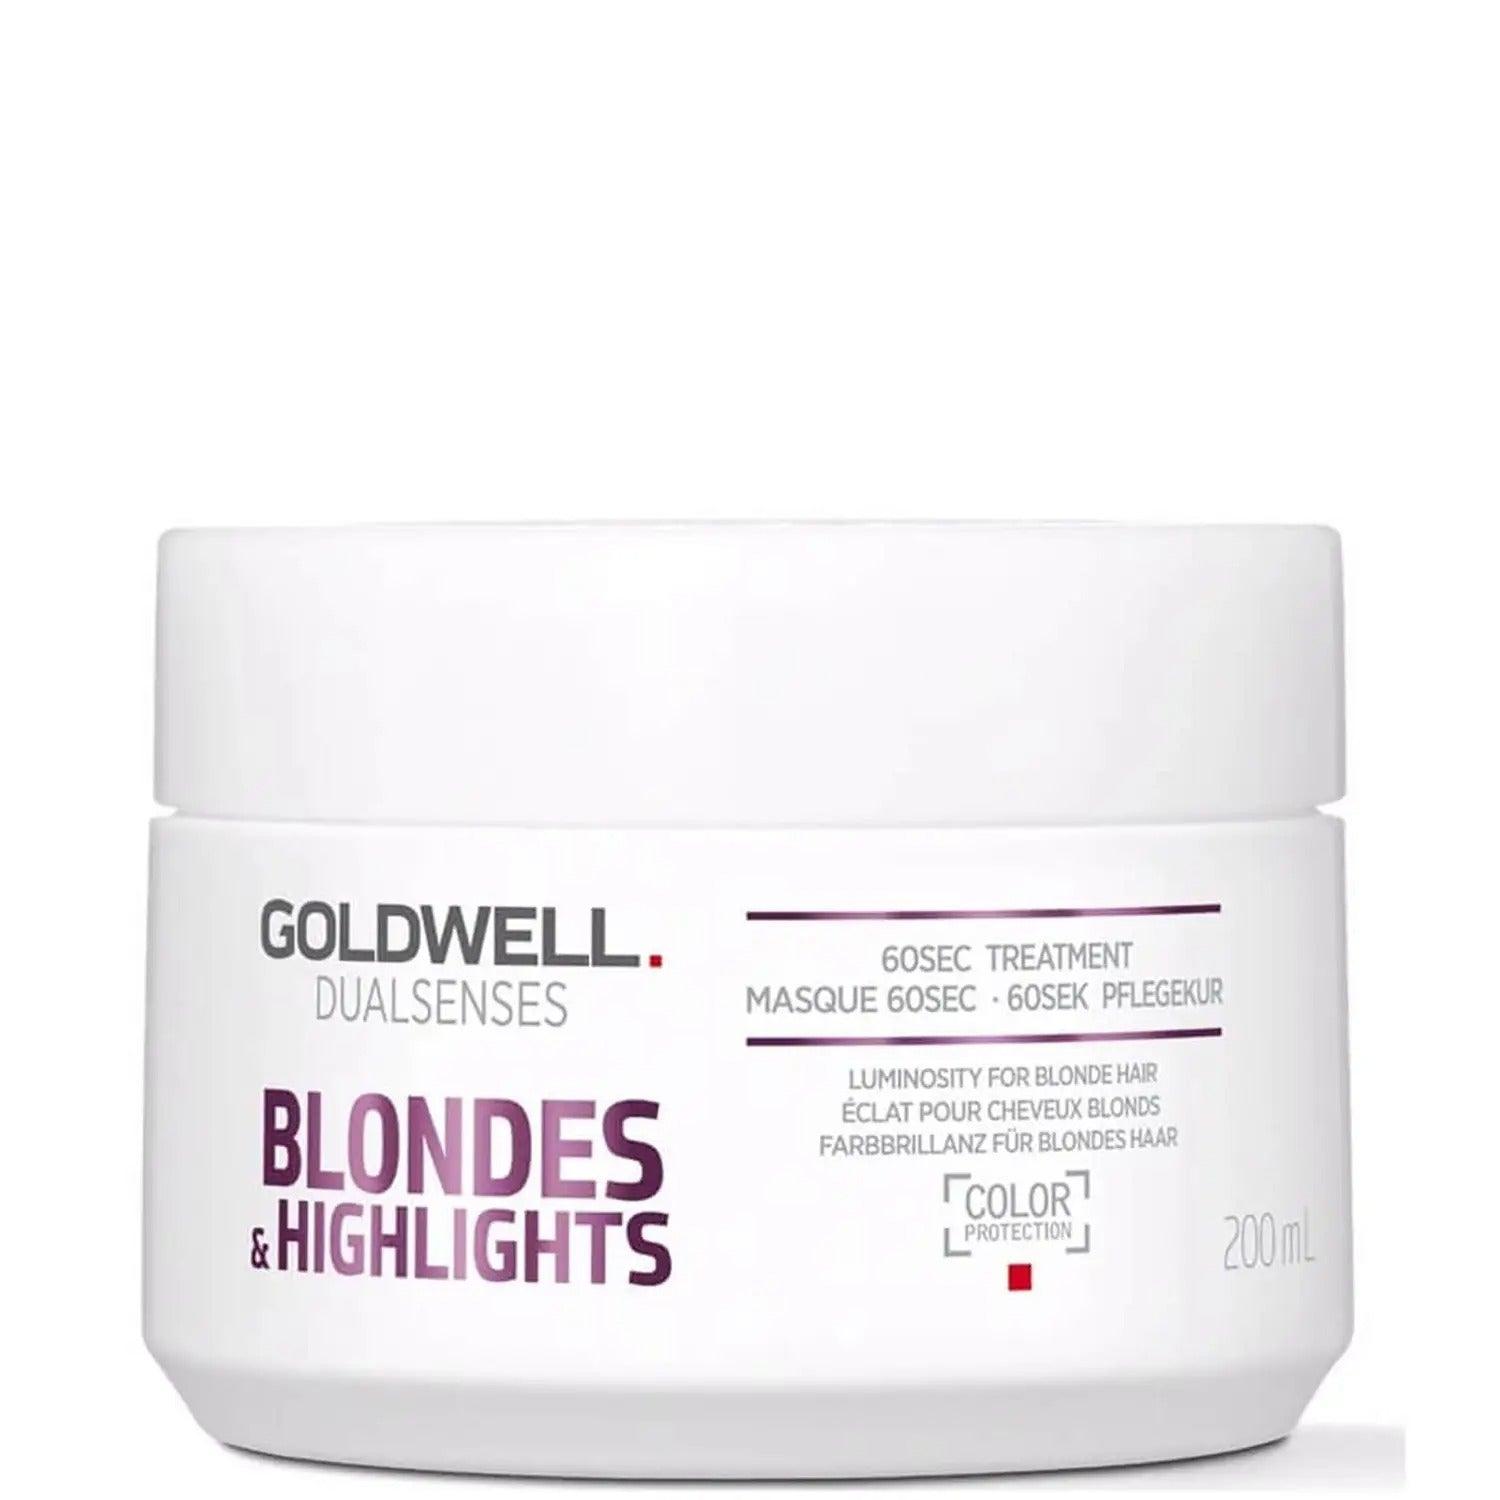 Goldwell Dualsenses Blondes & Highlights 60sec Treatment 200ml - Goldwell